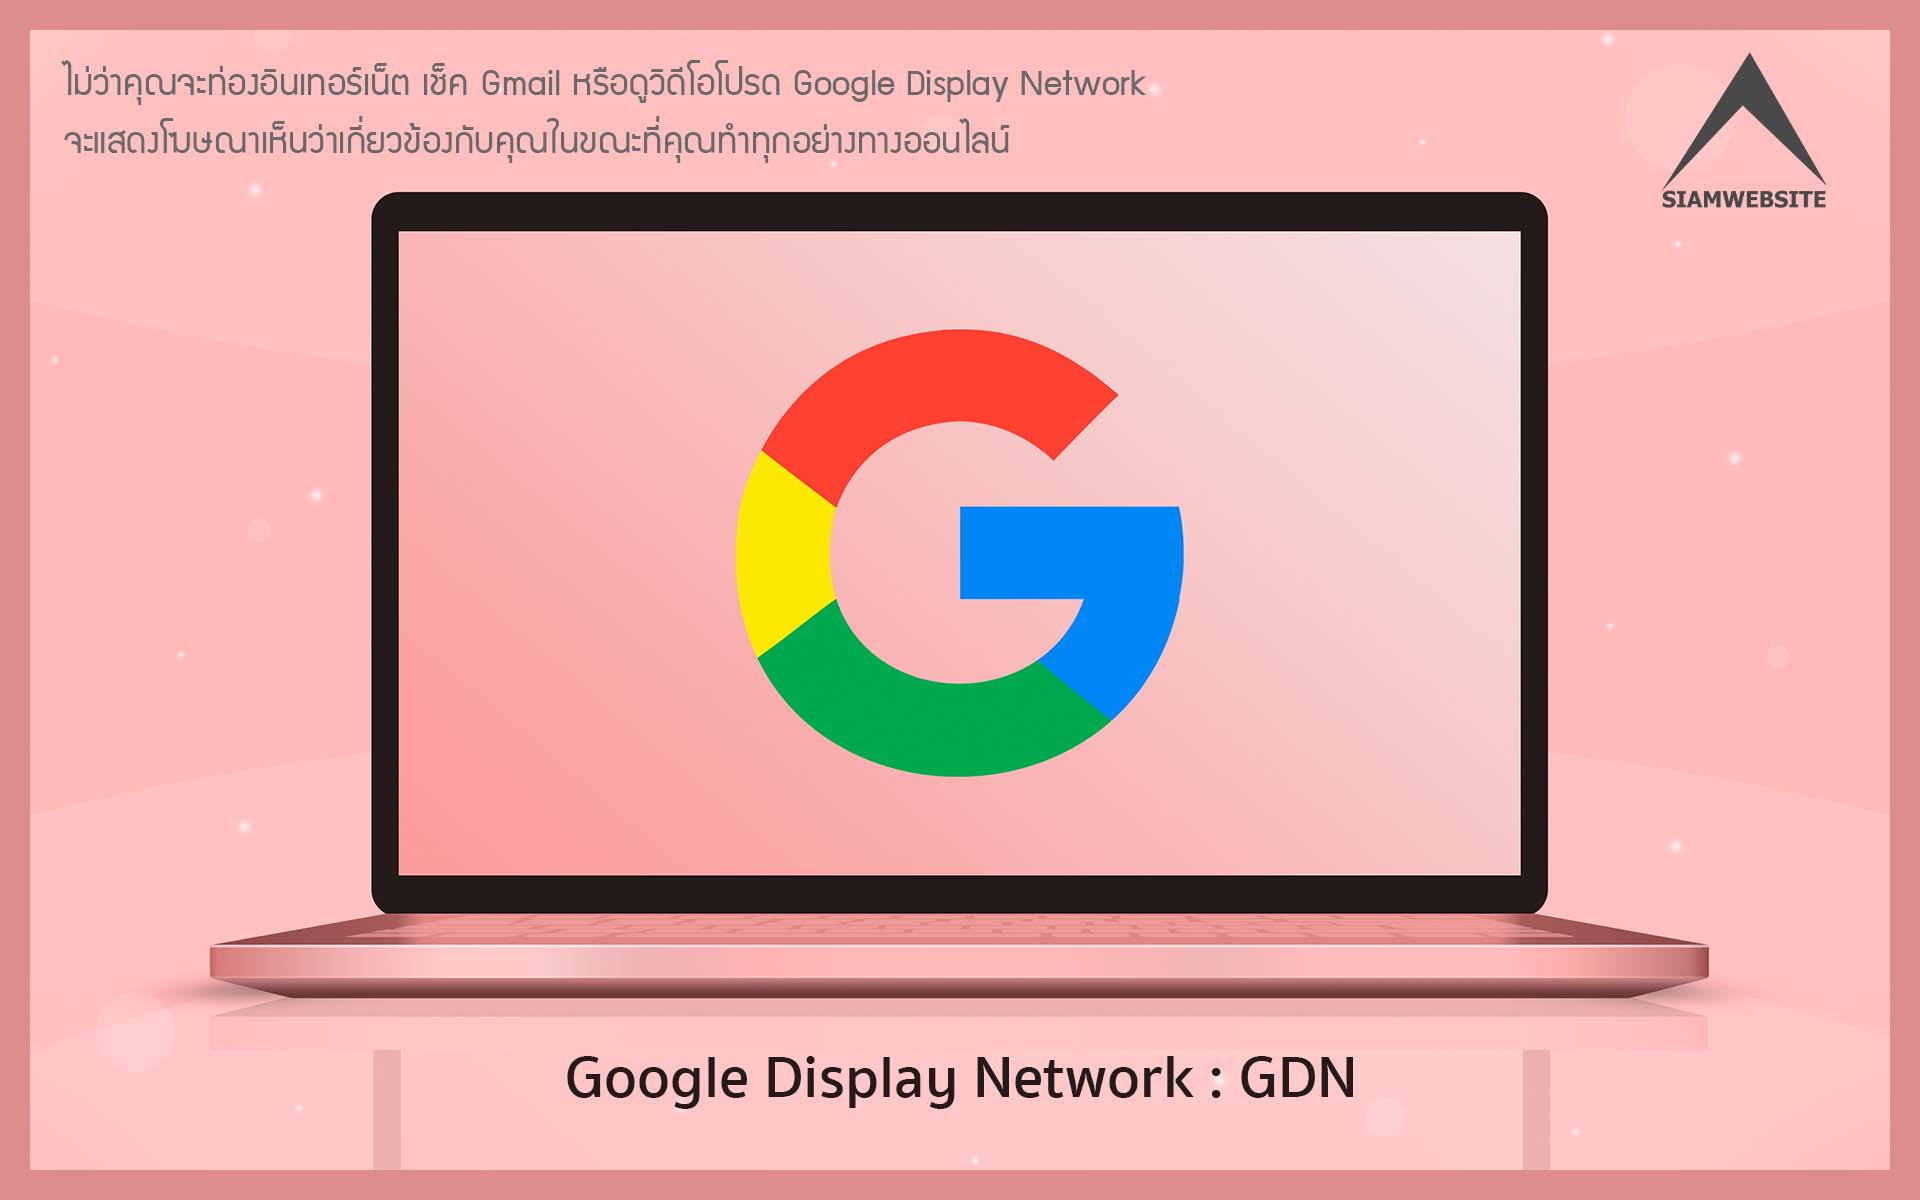 GDN ย่อมาจาก Google Display Network เครื่องมือโฆษณาของ Google บทความ ข่าวสาร rampagesoft